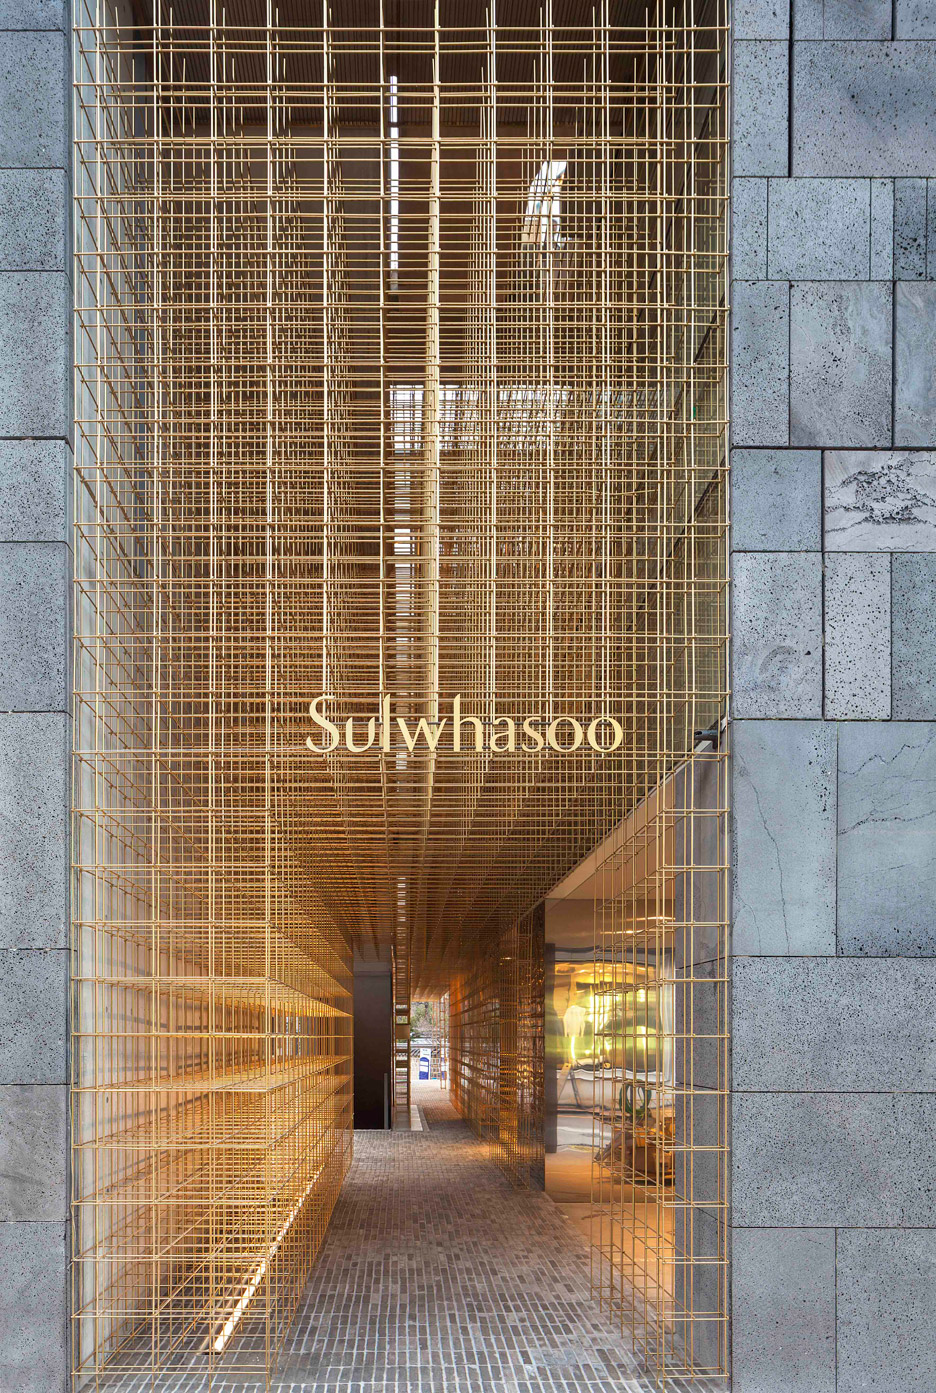 Sulwhasoo Flagship Store by Neri&Hu